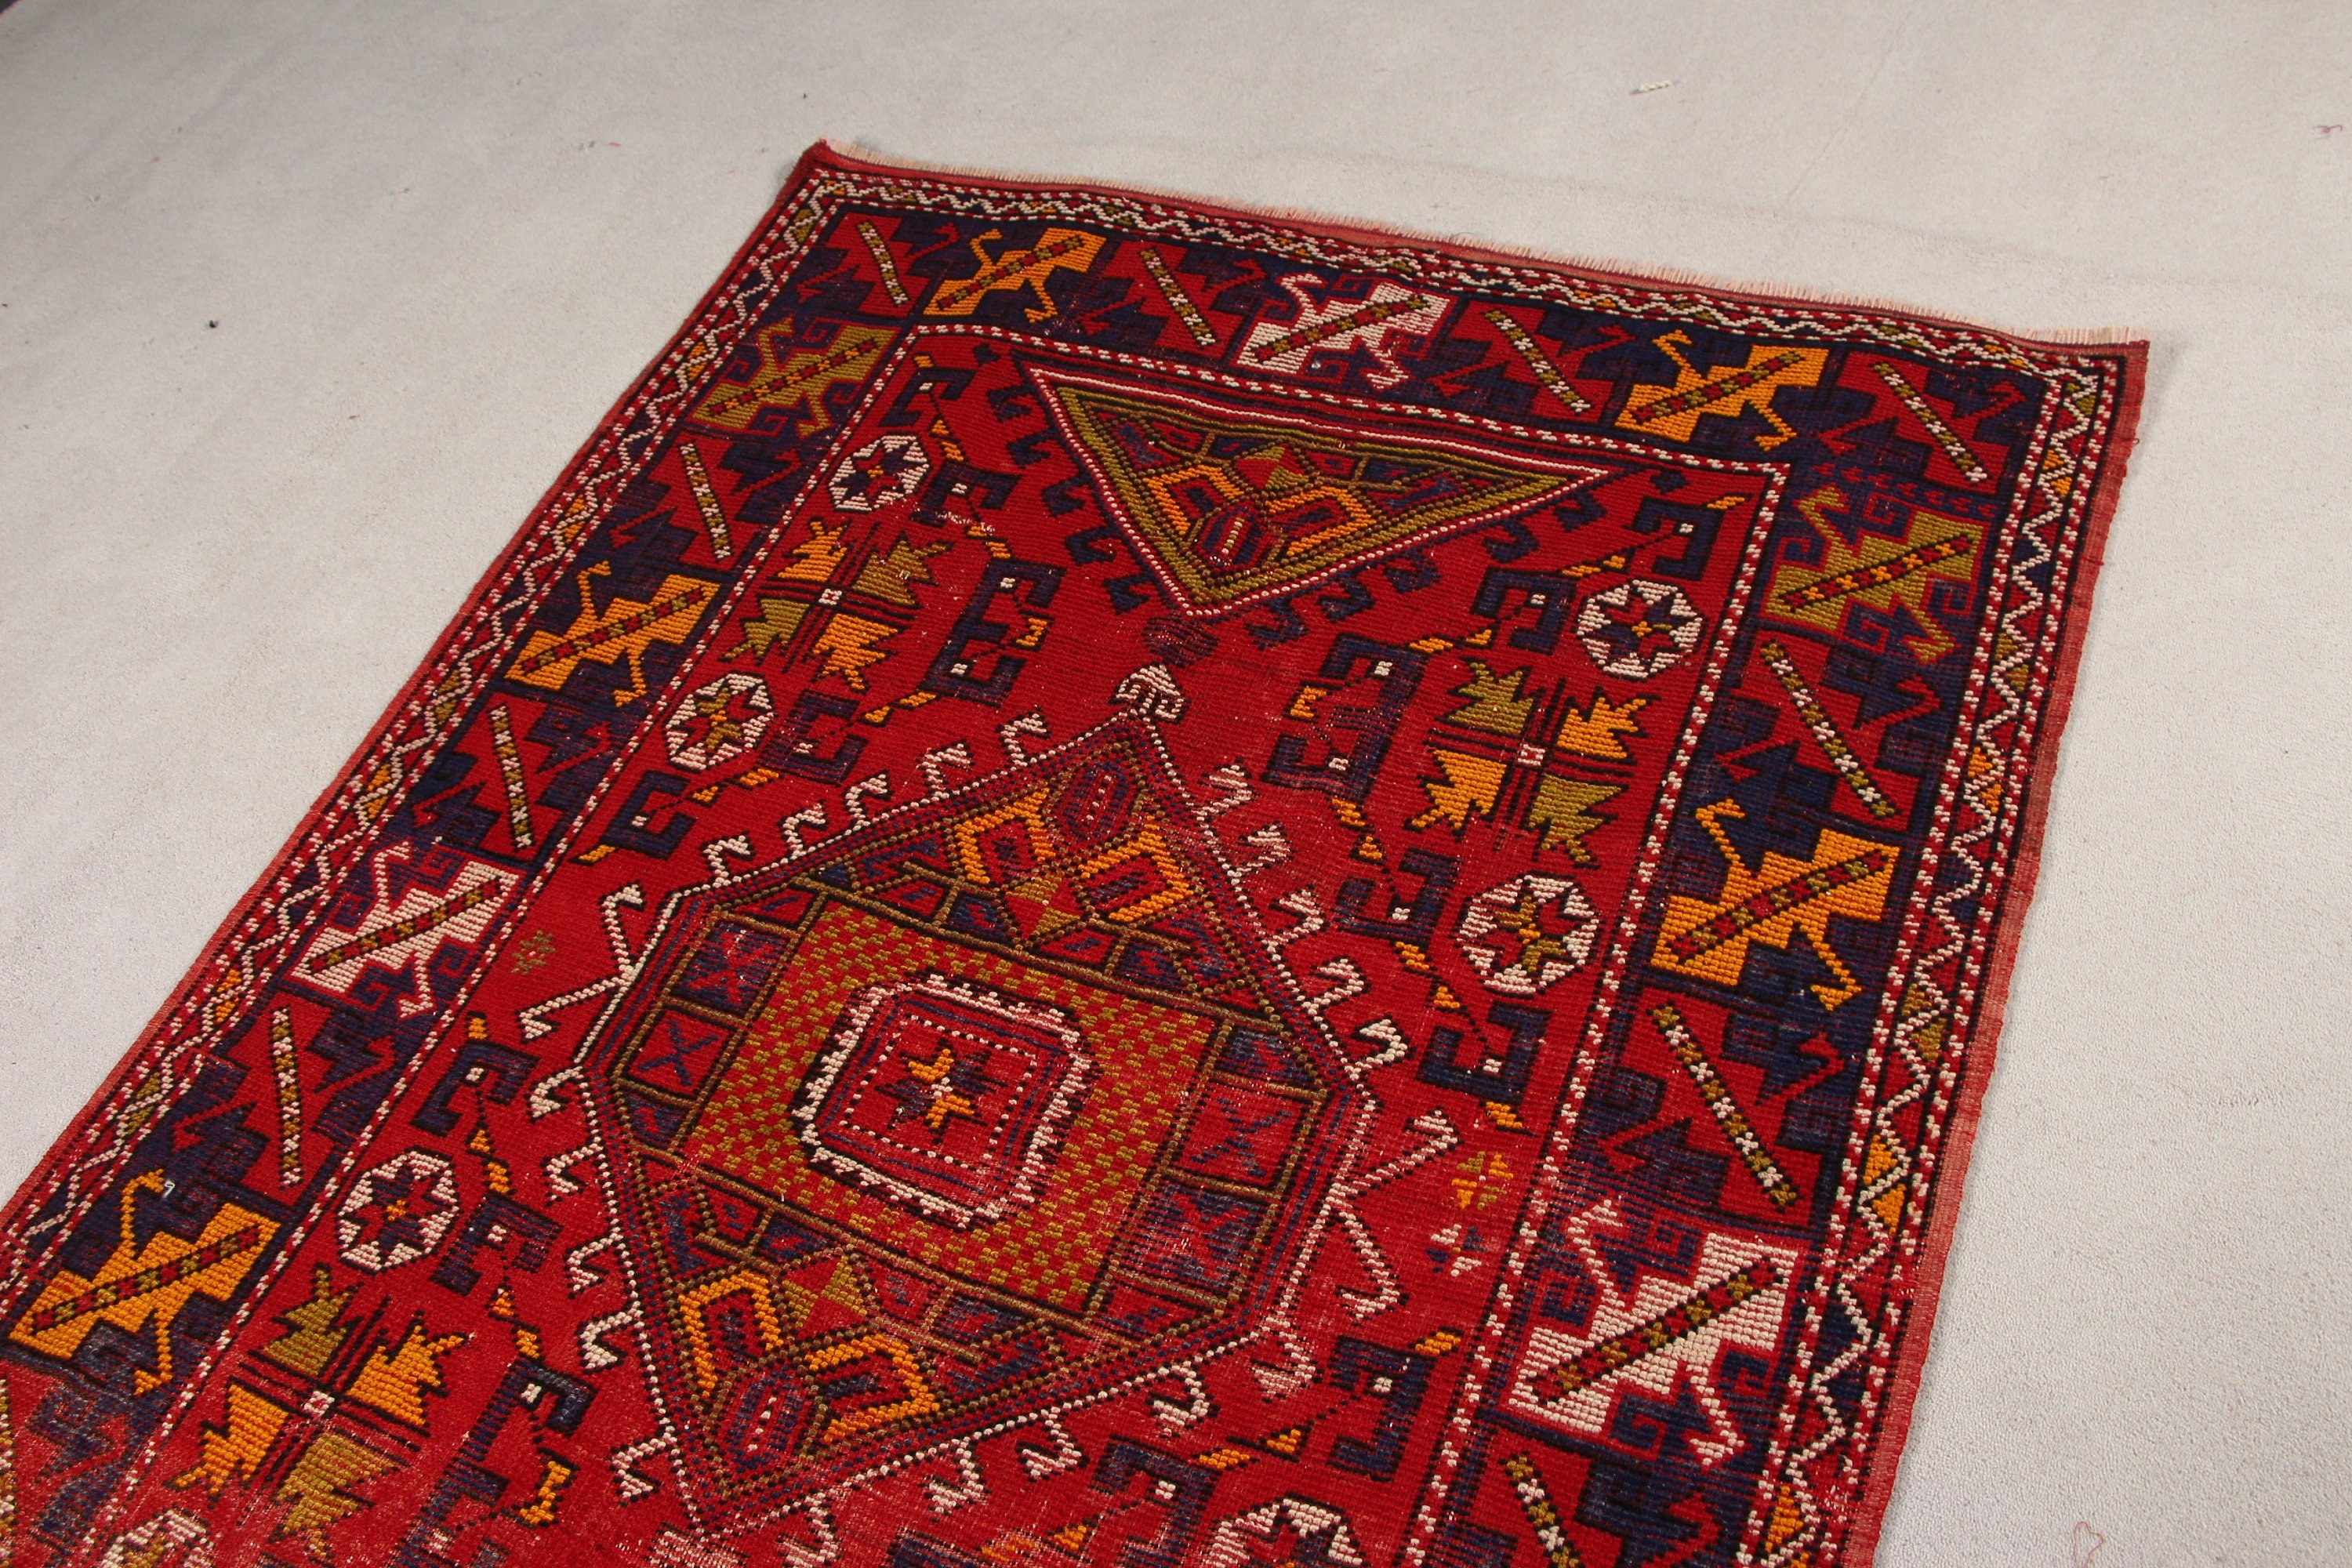 Floor Rug, Vintage Rugs, Oushak Rugs, Anatolian Rug, 4.1x6 ft Area Rug, Rugs for Dining Room, Indoor Rugs, Turkish Rug, Red Moroccan Rugs